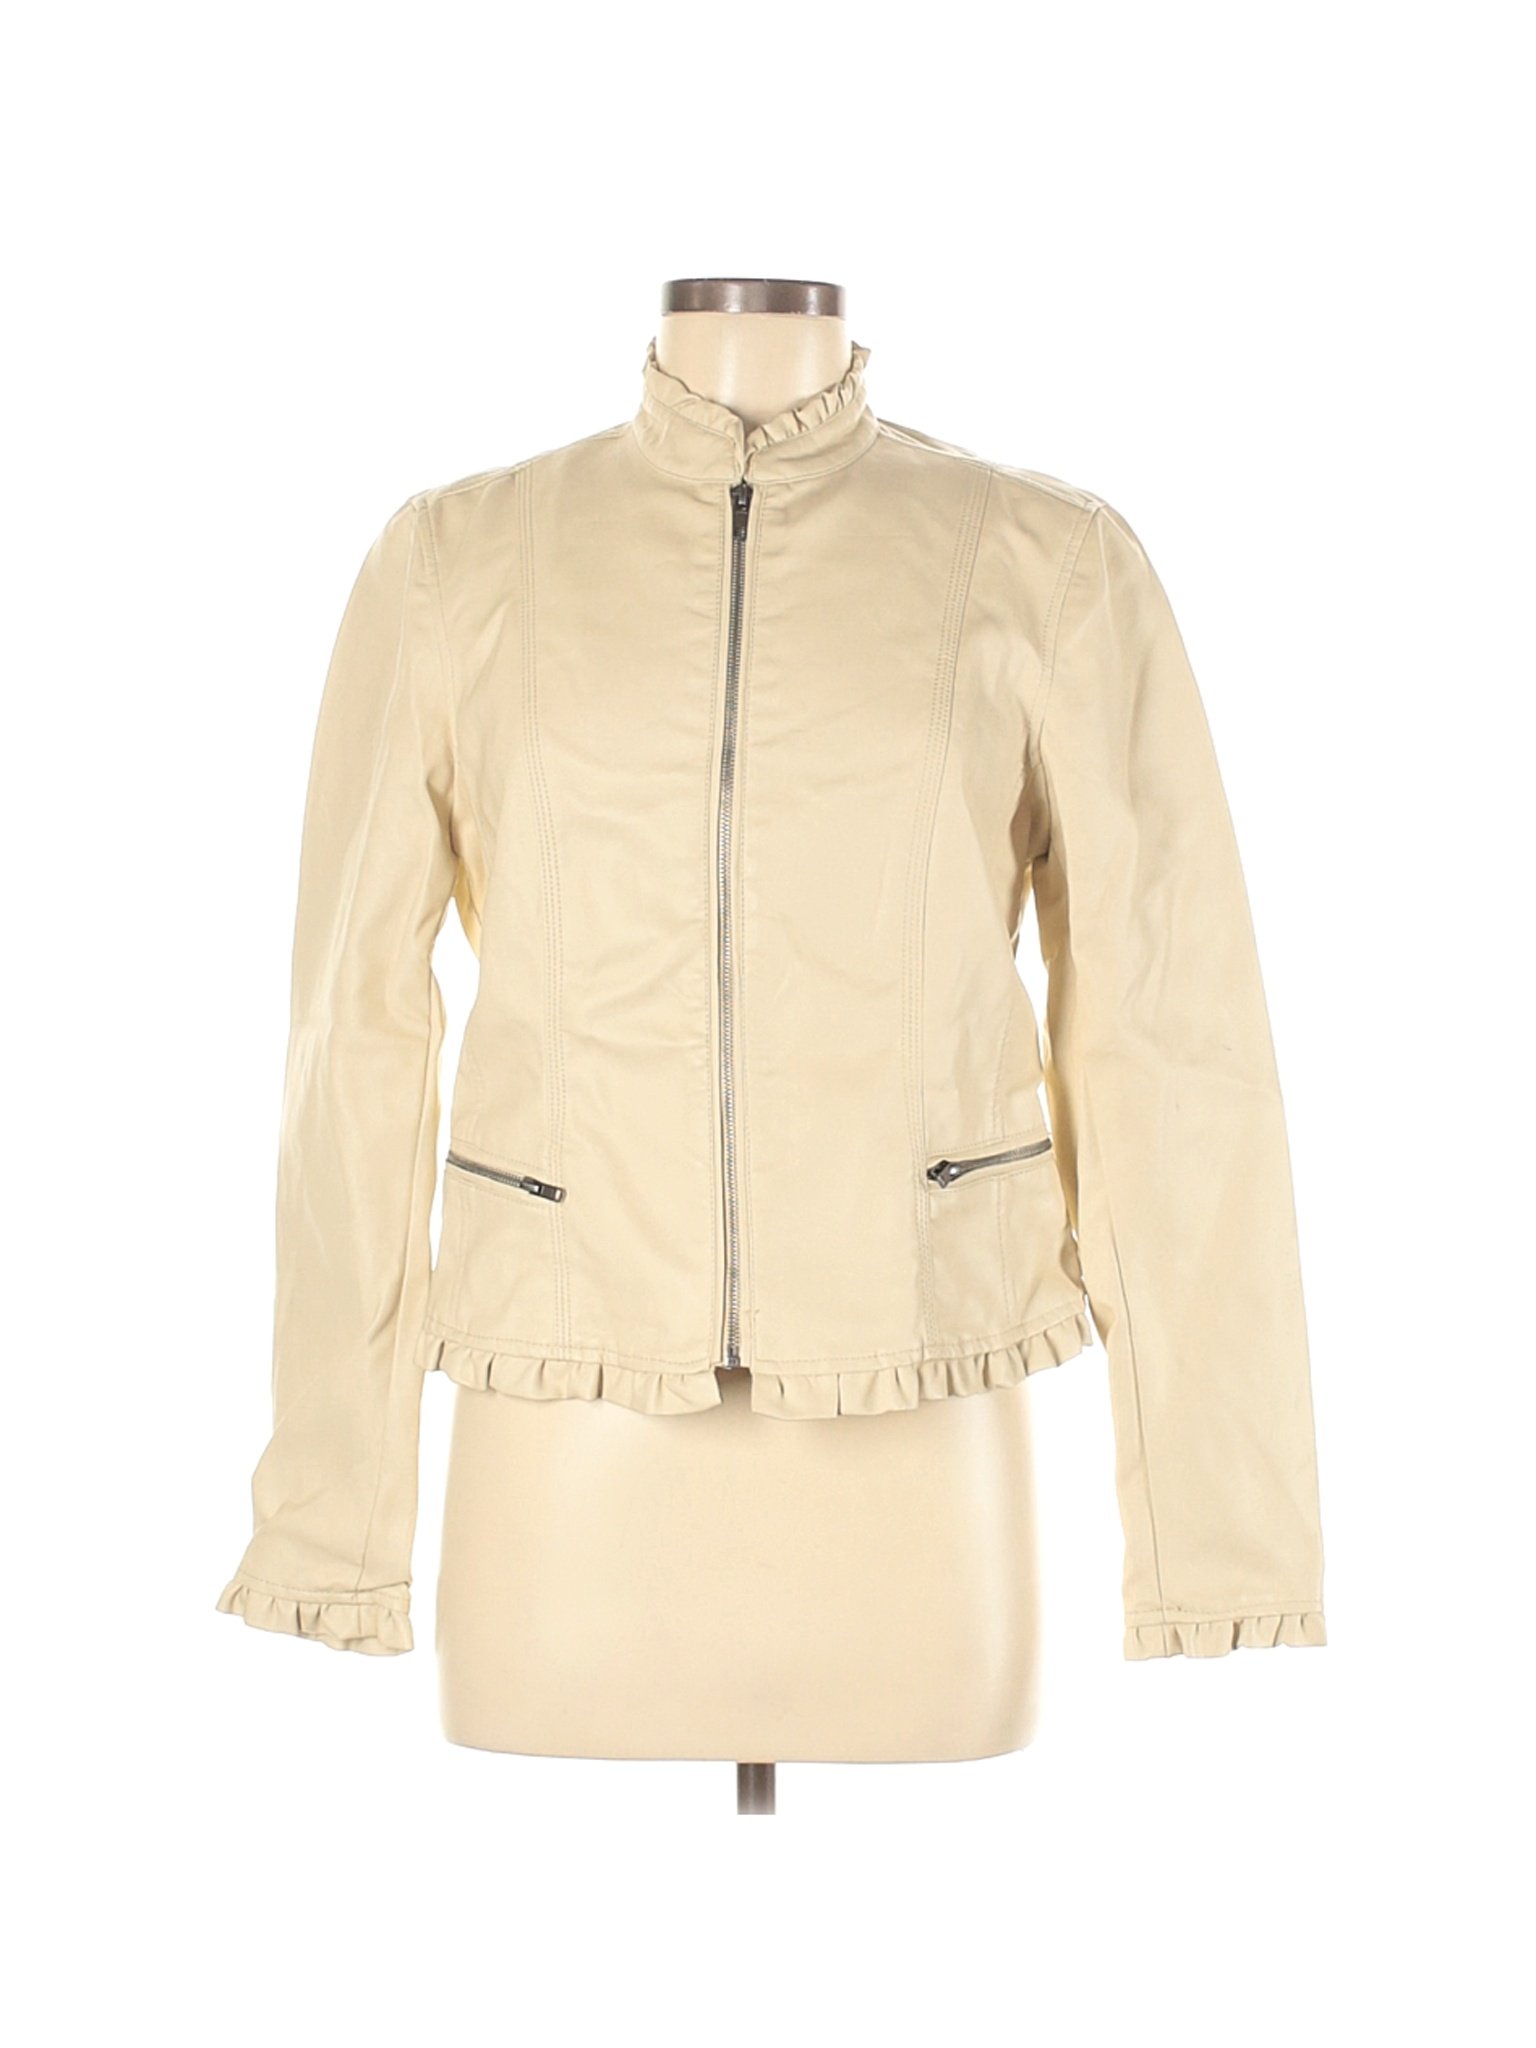 NWT Baccini Women Brown Faux Leather Jacket M | eBay